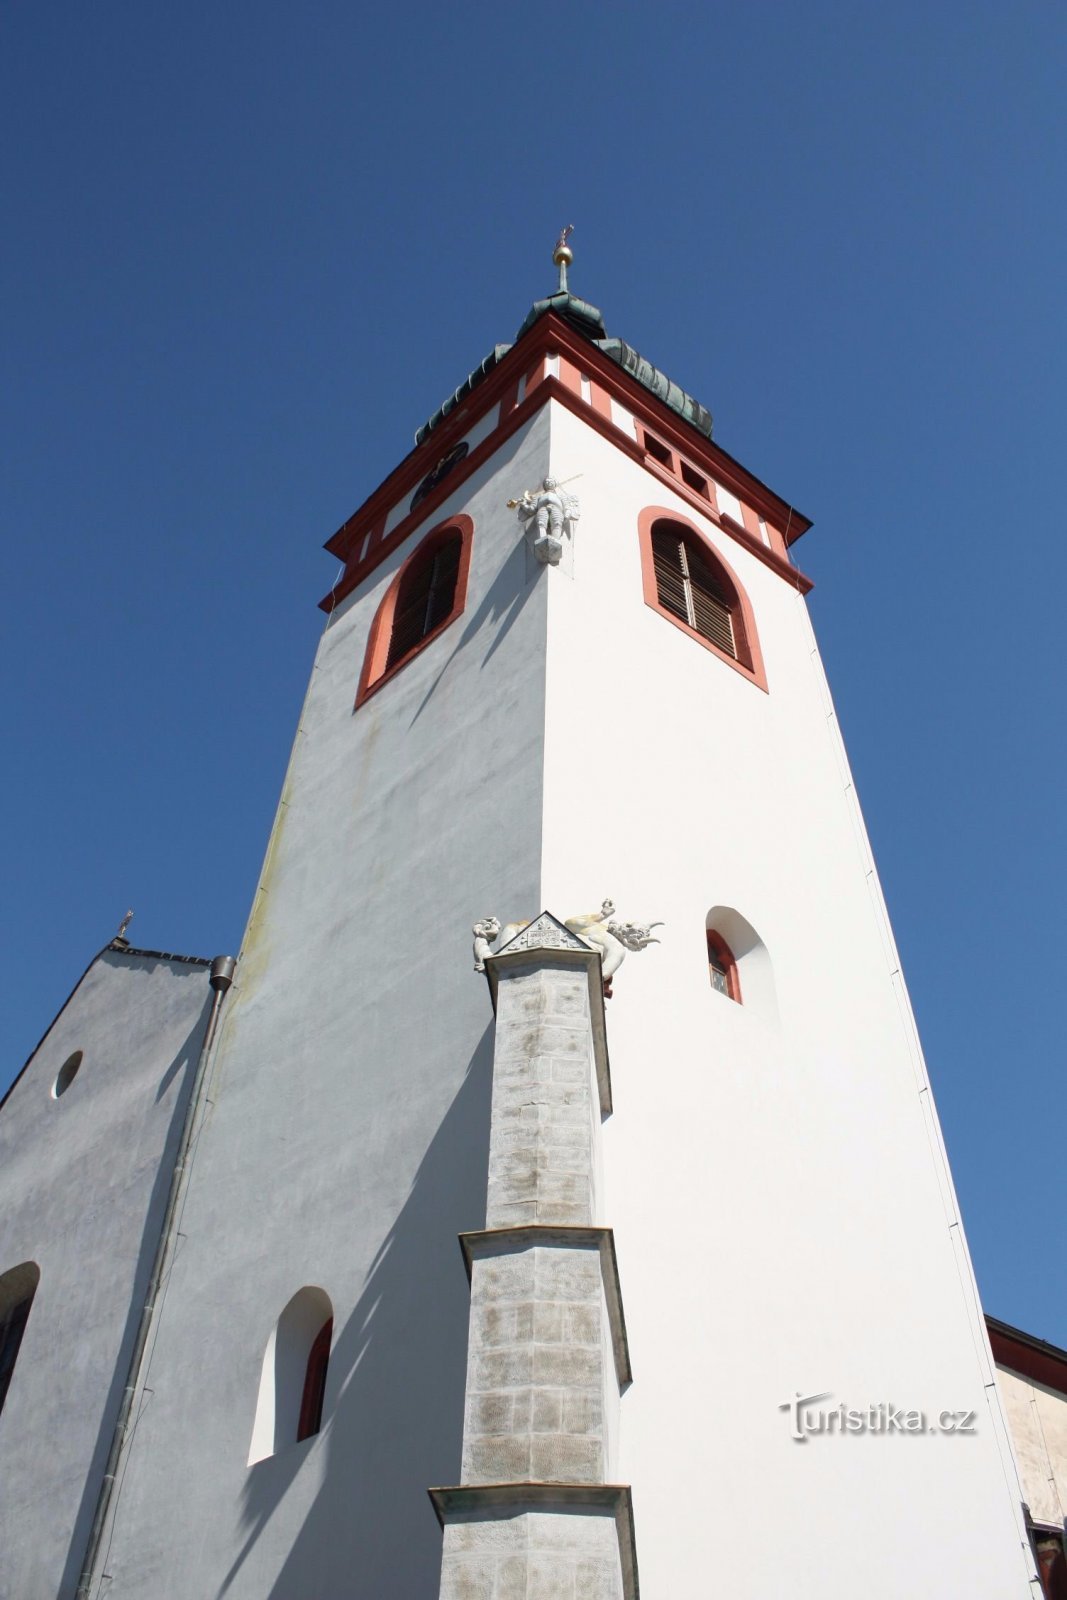 Basilica of St. Wenceslas in Stará Boleslav